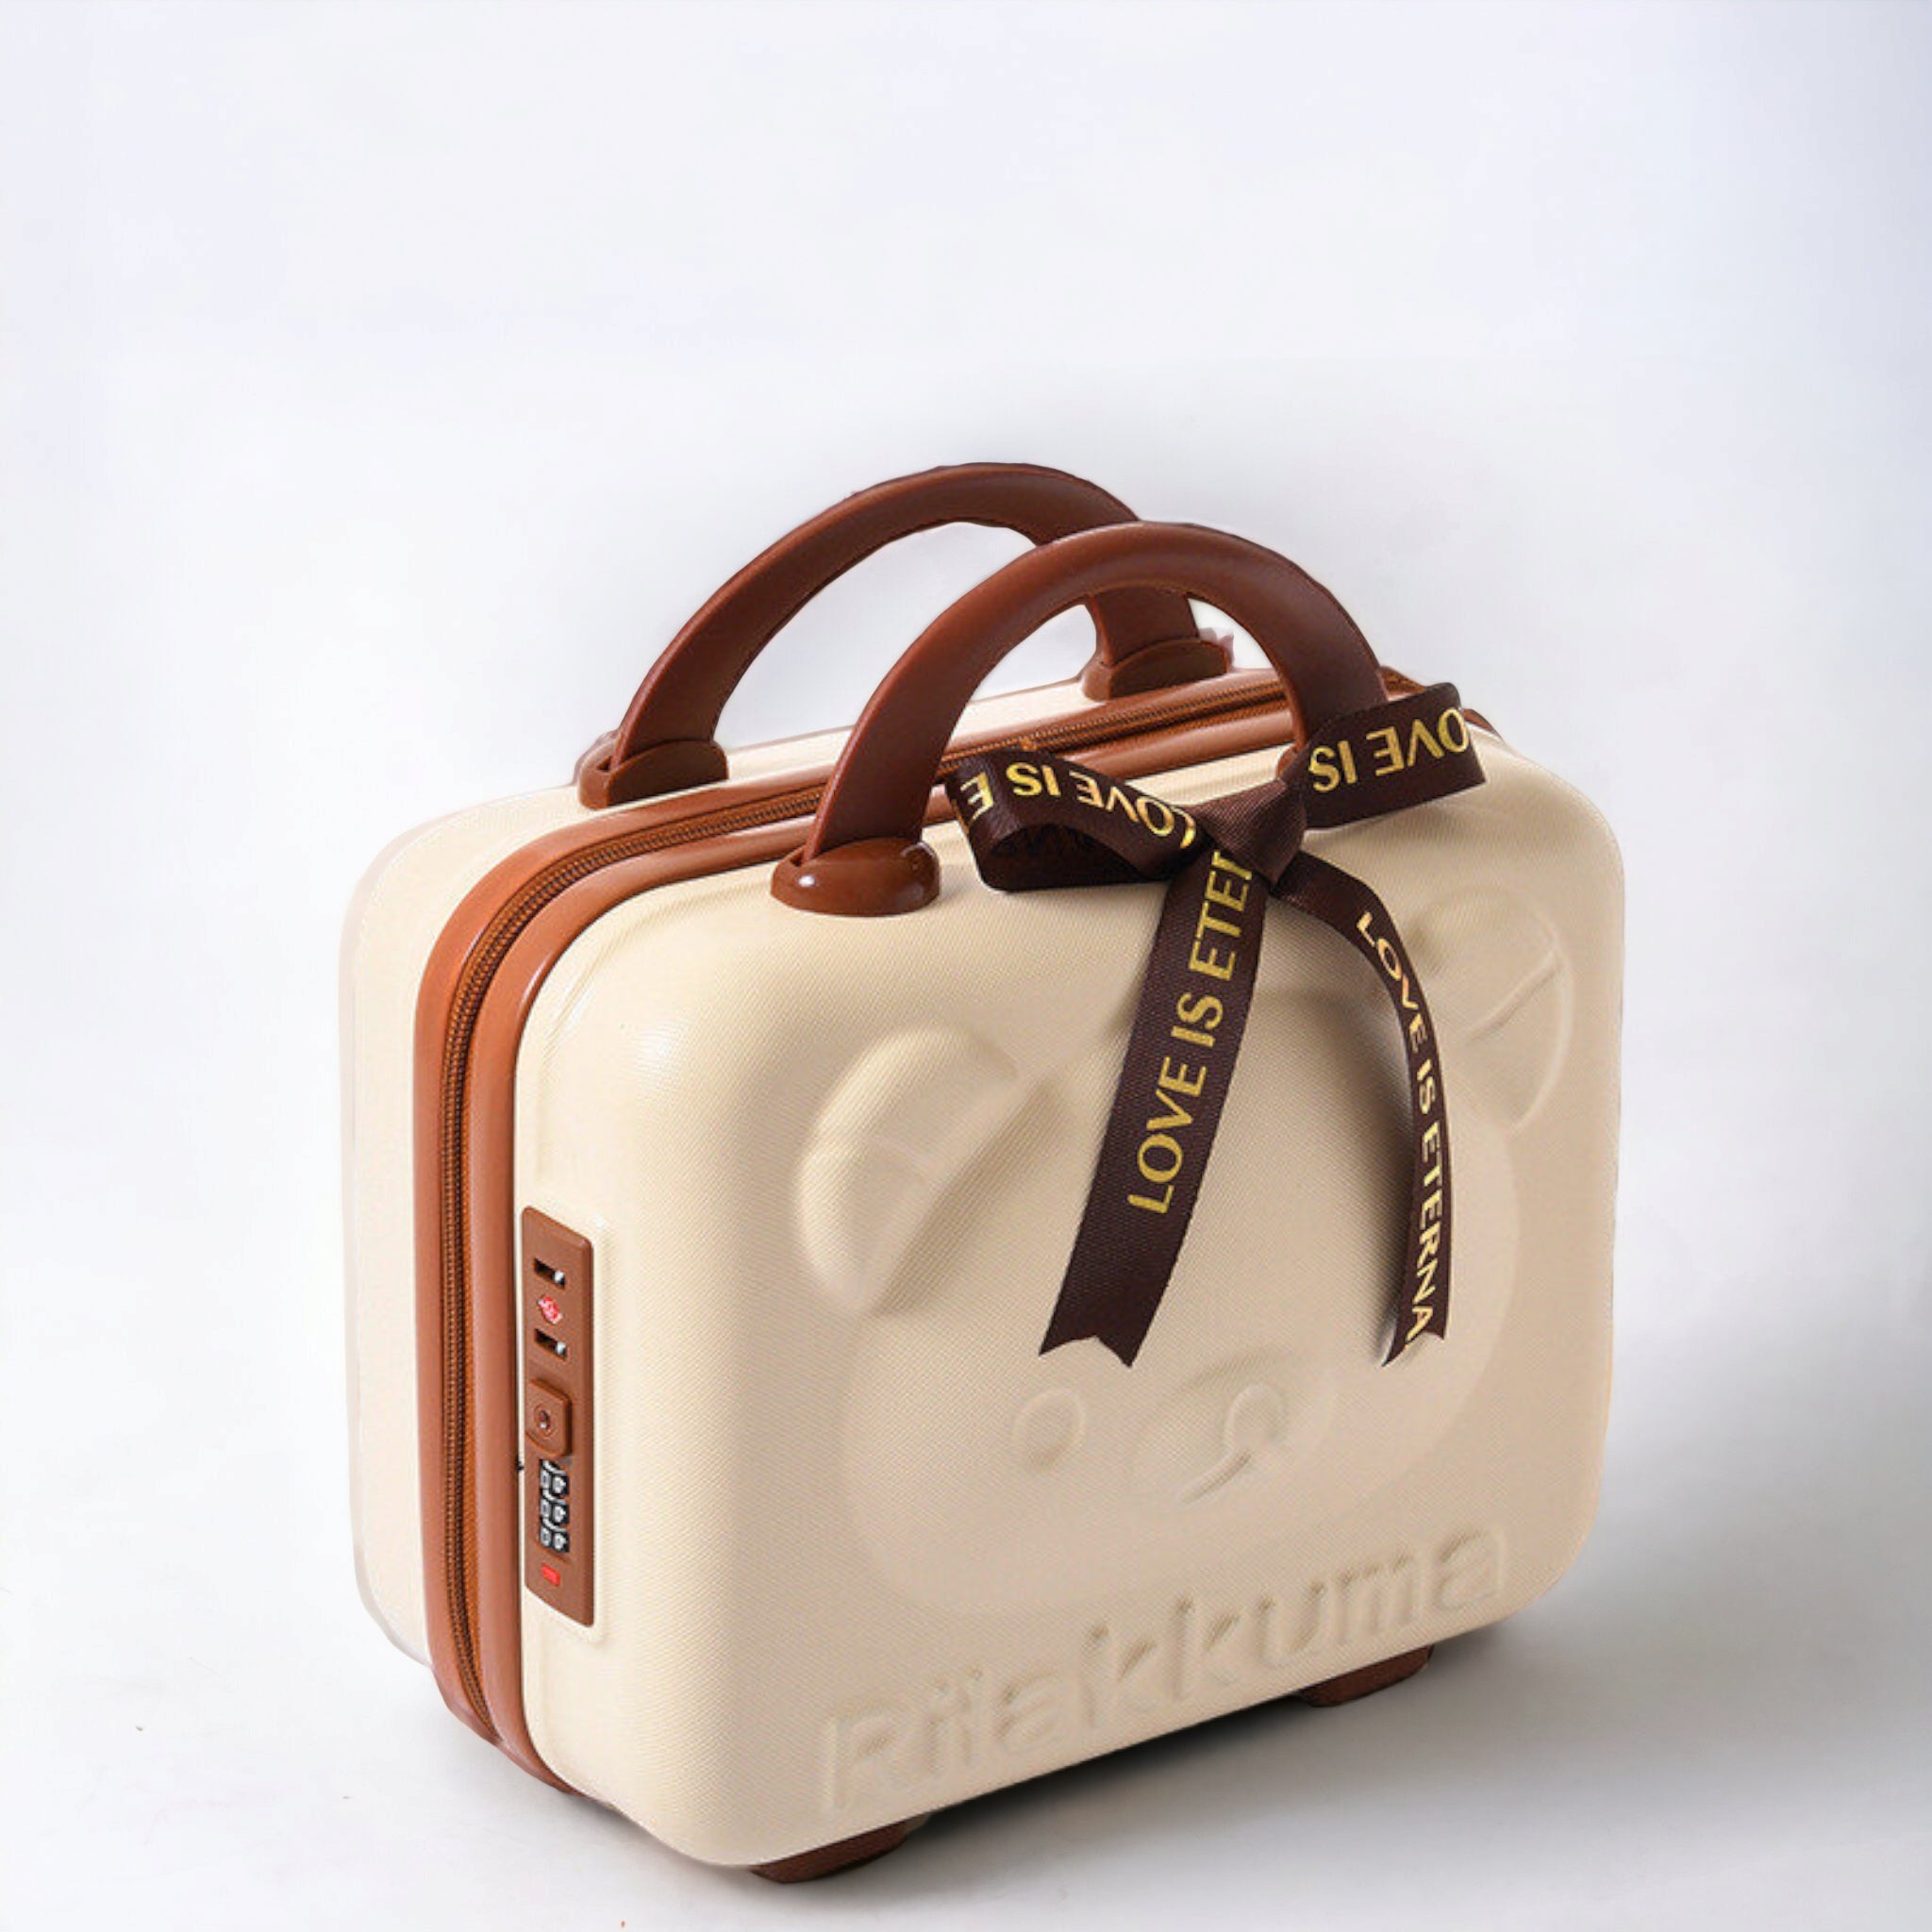 British Style Teddy Bear Password Suitcase Gift Set